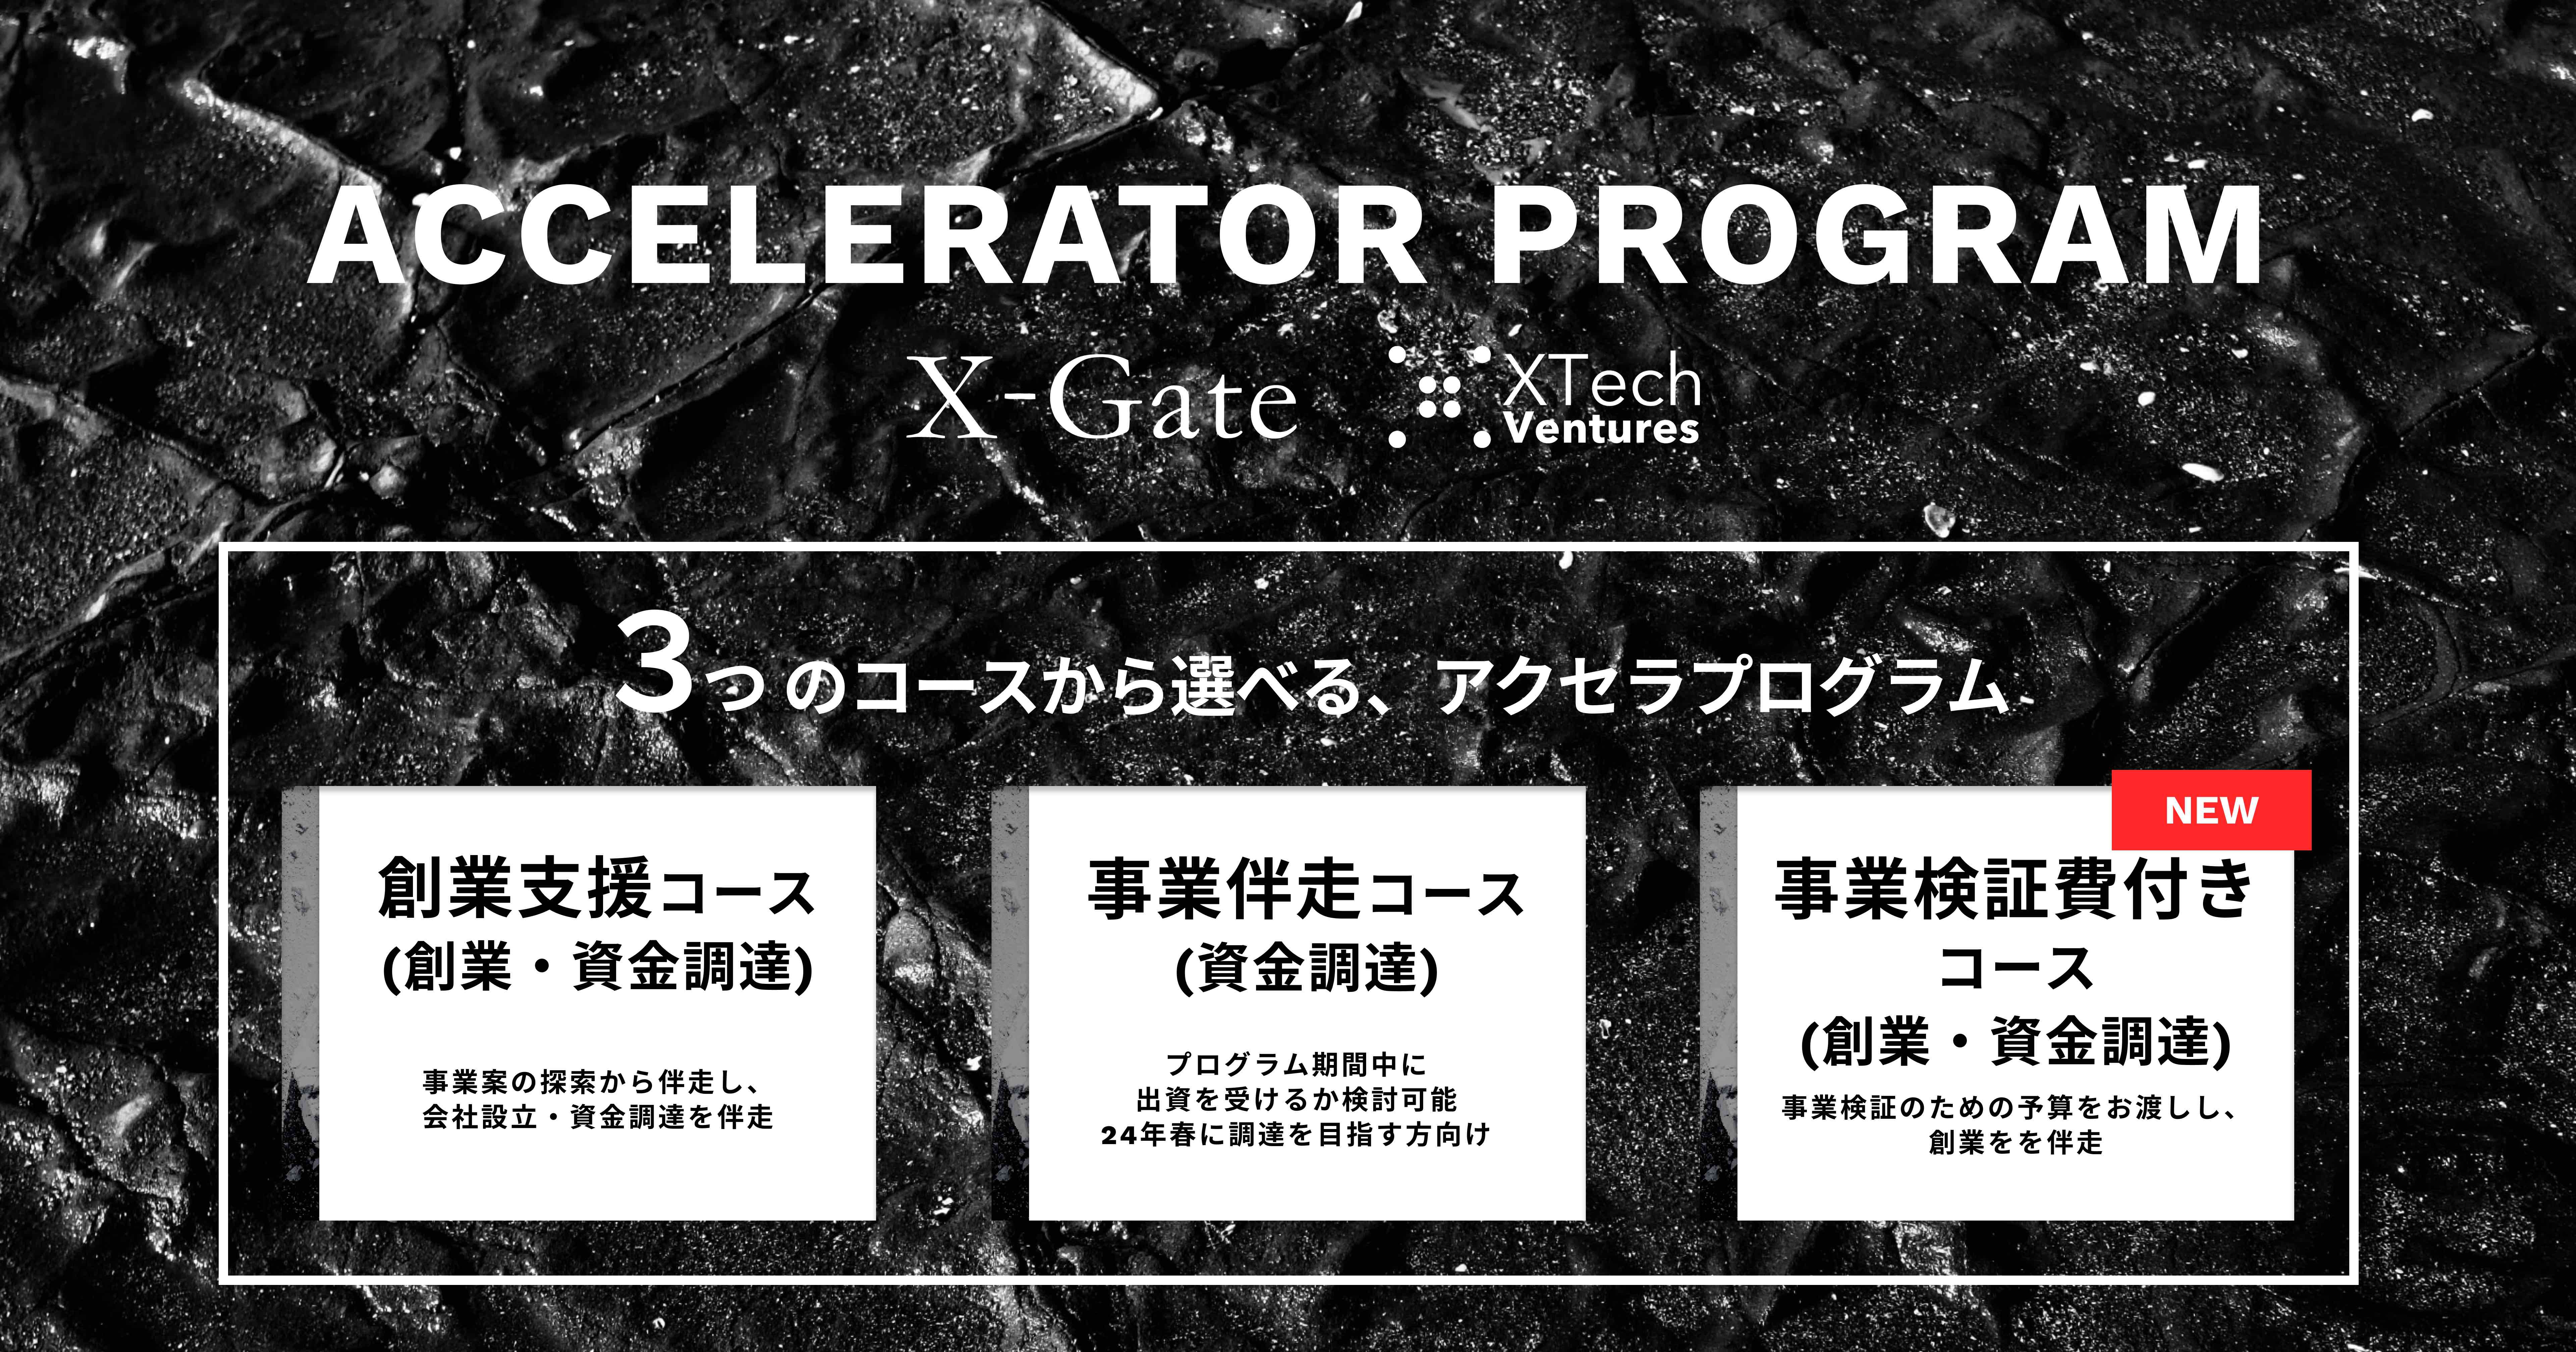 XTech Venturesのアクセラレーションプログラム『X-Gate』にて東京建物株式会社と連携した「多様な主体によるスタートアップ支援展開事業（TOKYO SUTEAM）」対象コースを追加公開の画像